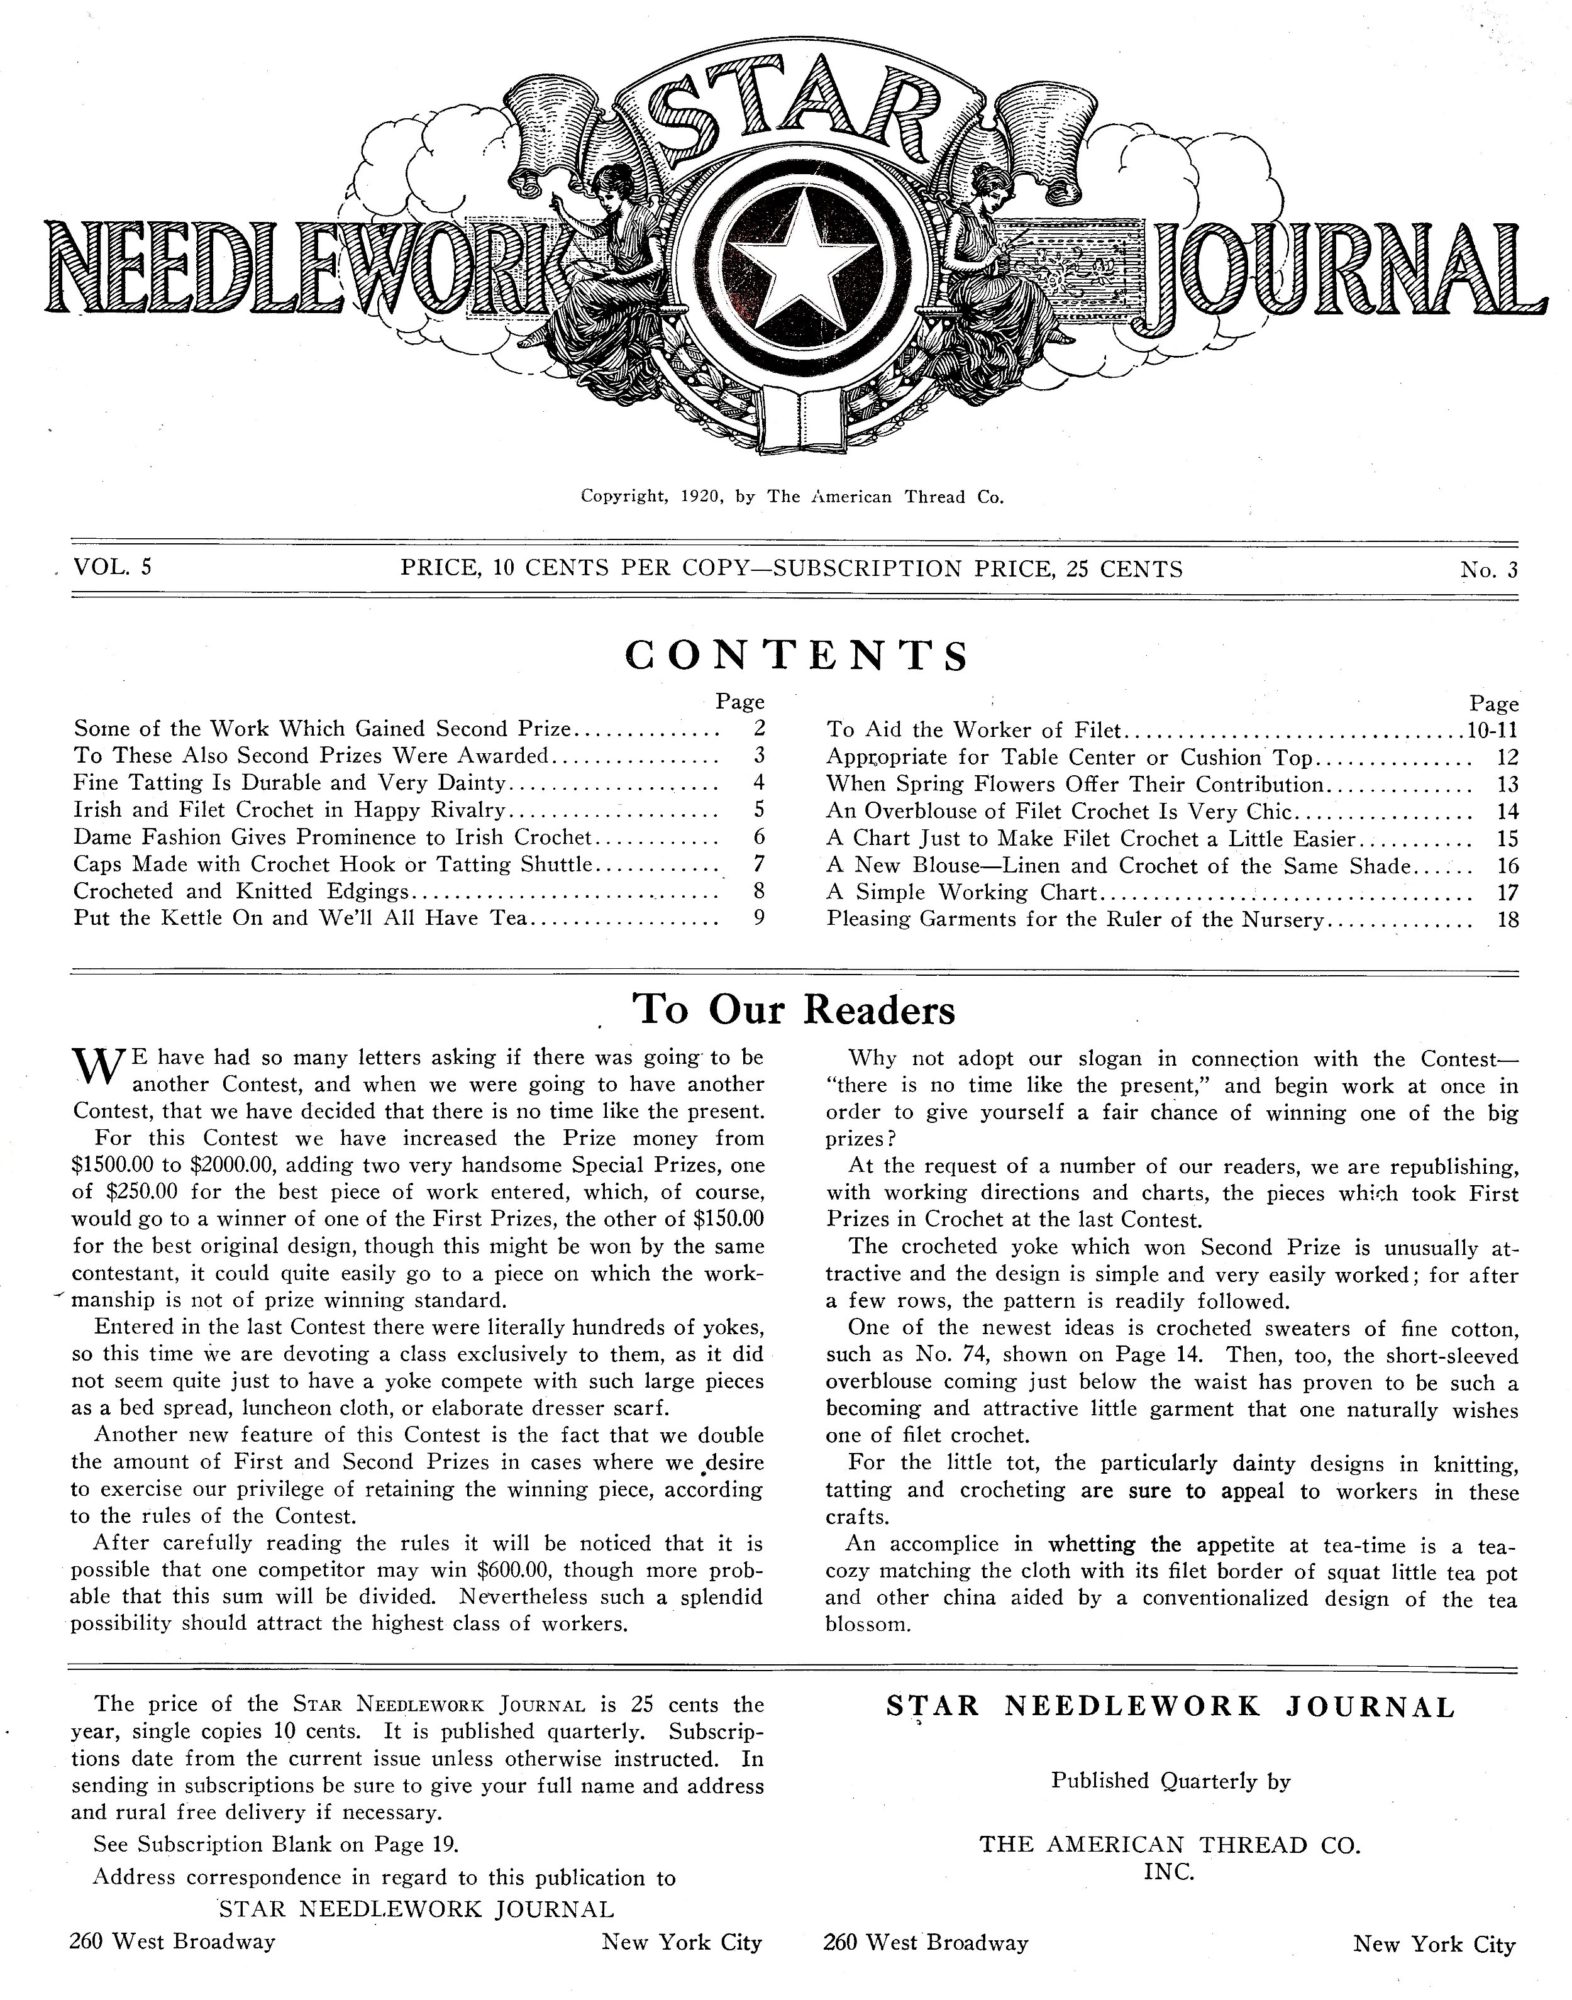 3 Star Needlework Journal Vol 5 contents